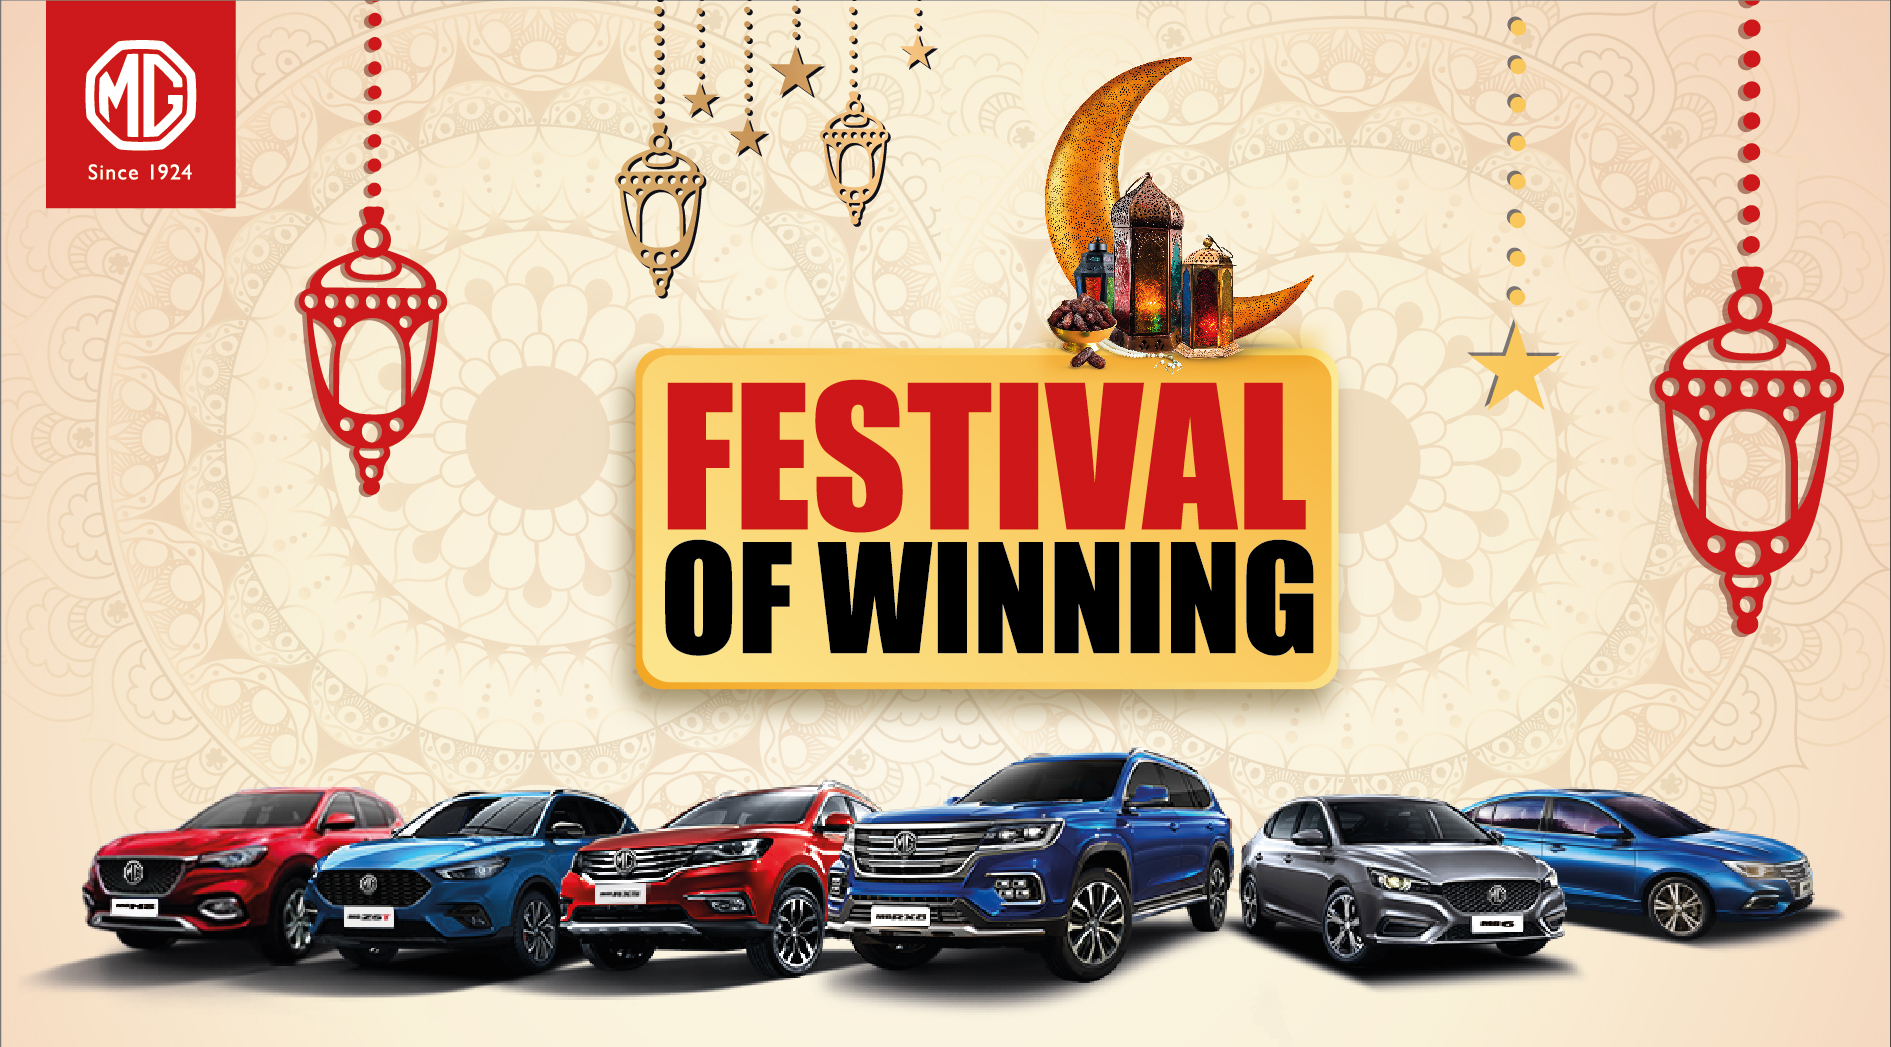 MG presents the 'Festival of Winning' this Ramadan - The Arabian Stories News